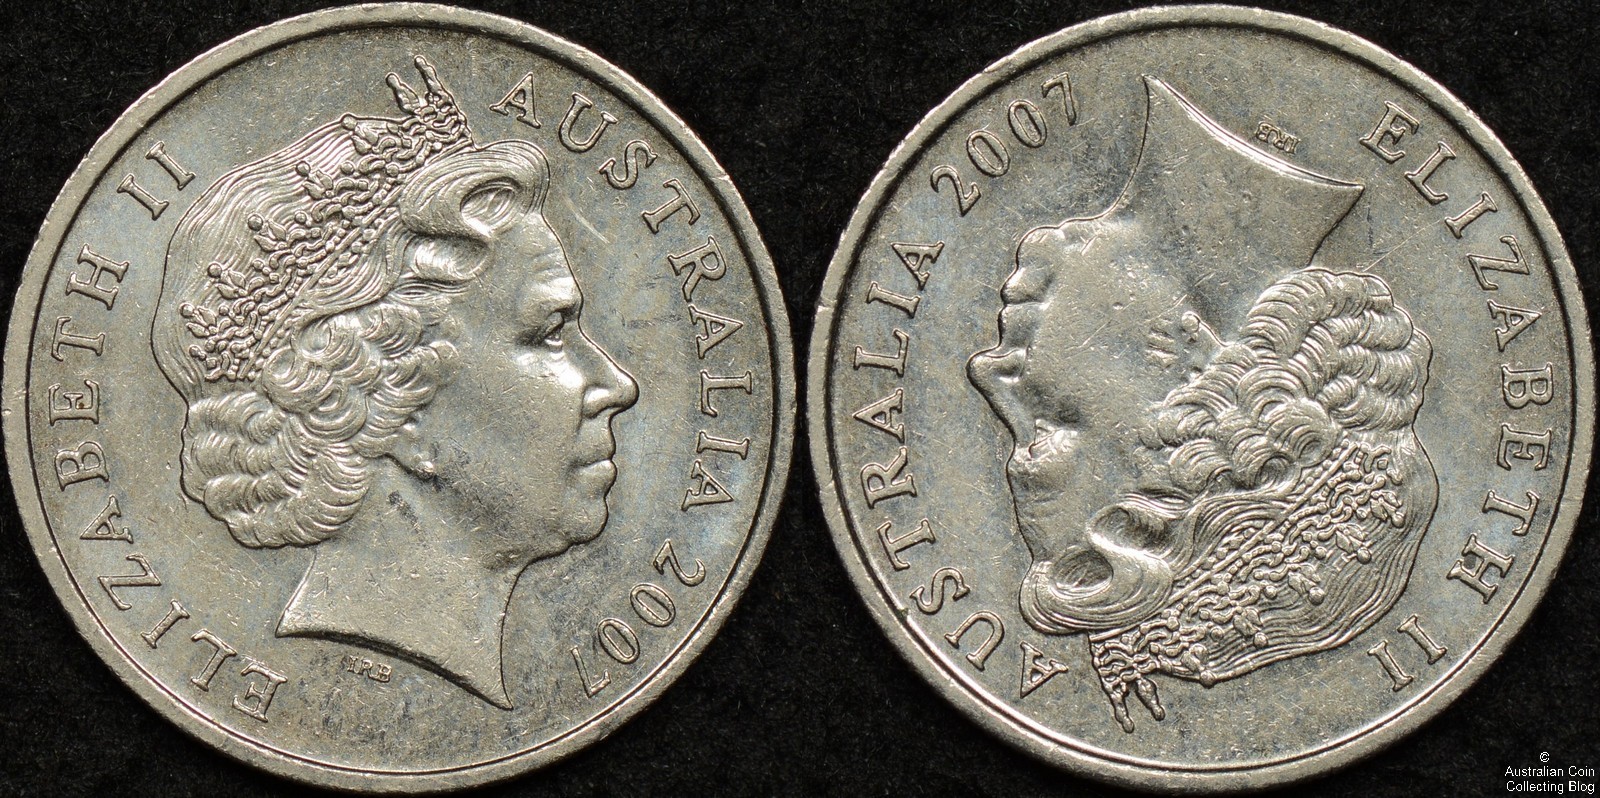 Five Rare Australian Coins that are Worth Money - The Australian Coin